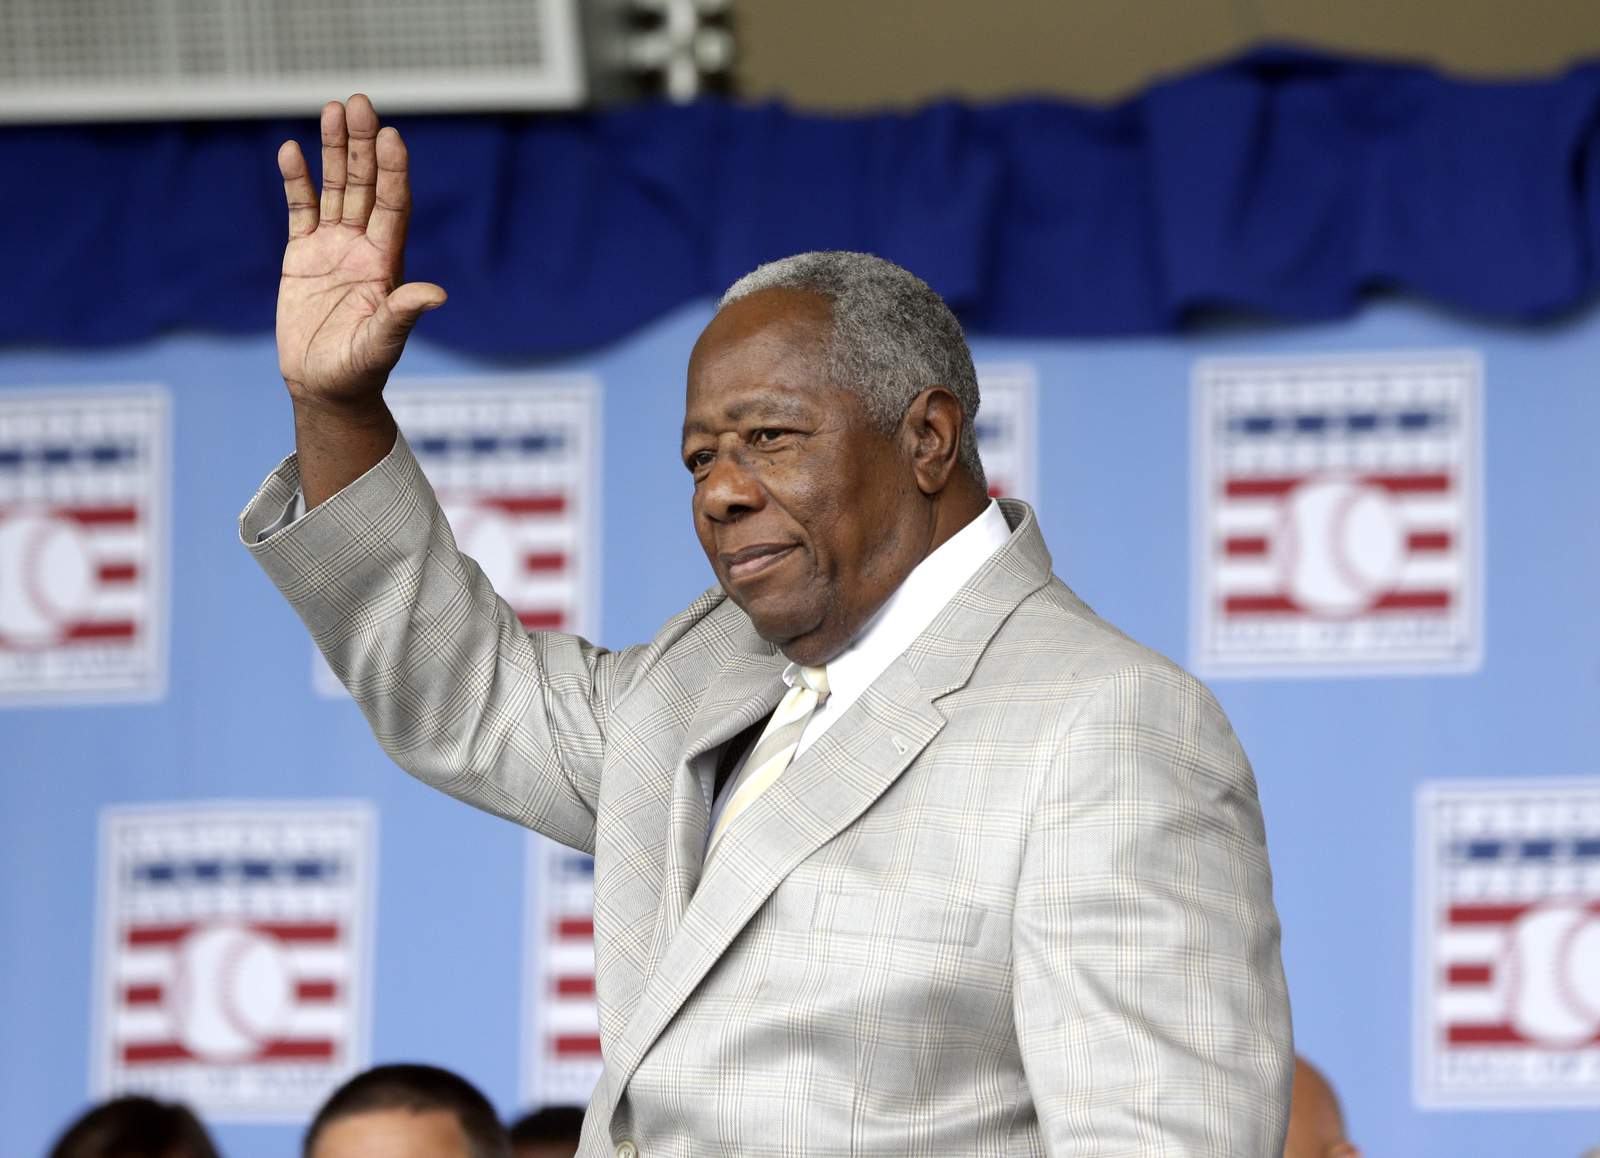 Hank Aaron, baseball’s one-time home run king, dies at 86